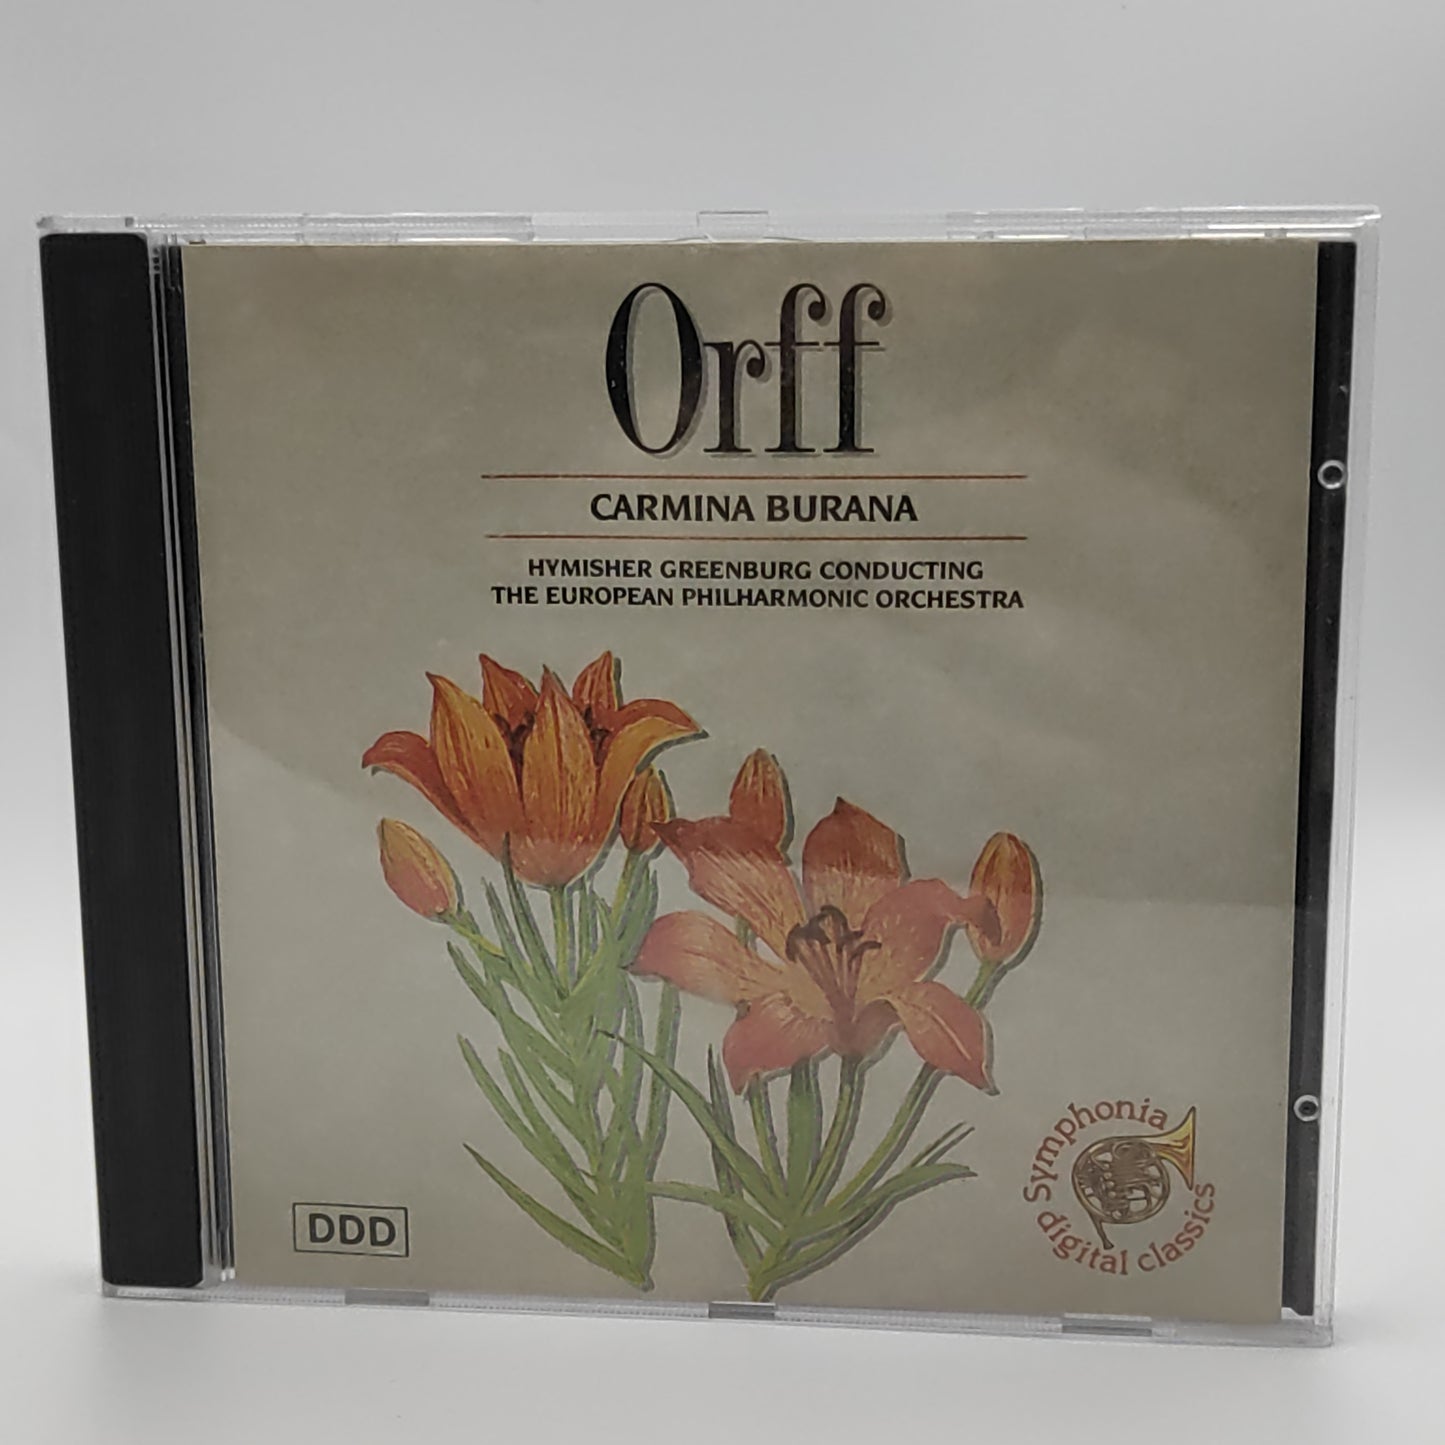 Orff* - Hymisher Greenburg Conducting The European Philharmonic Orchestra* – Carmina Burana